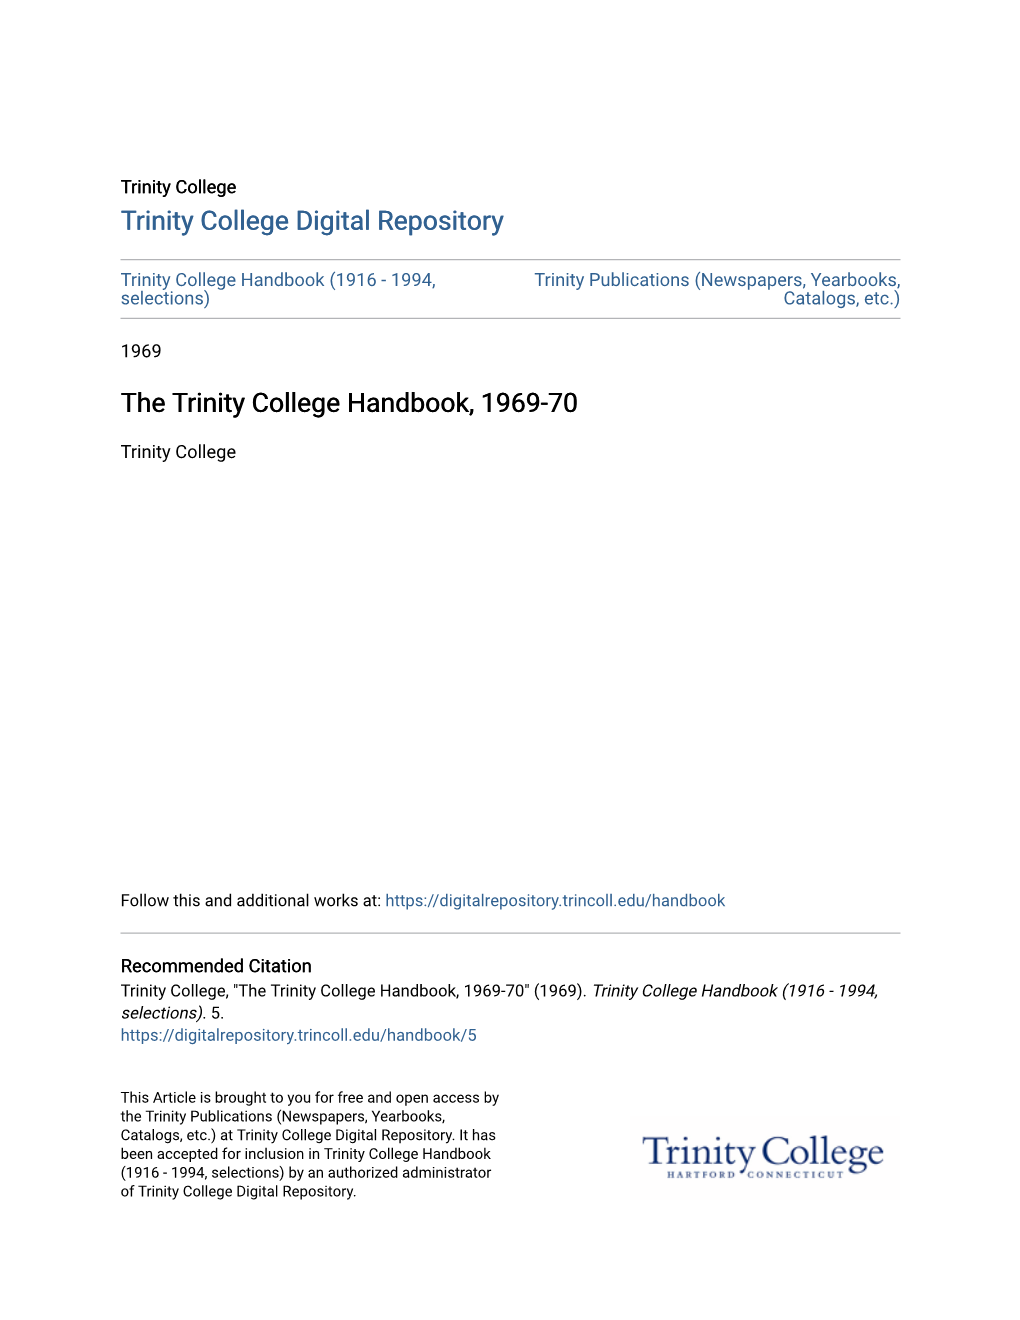 The Trinity College Handbook, 1969-70